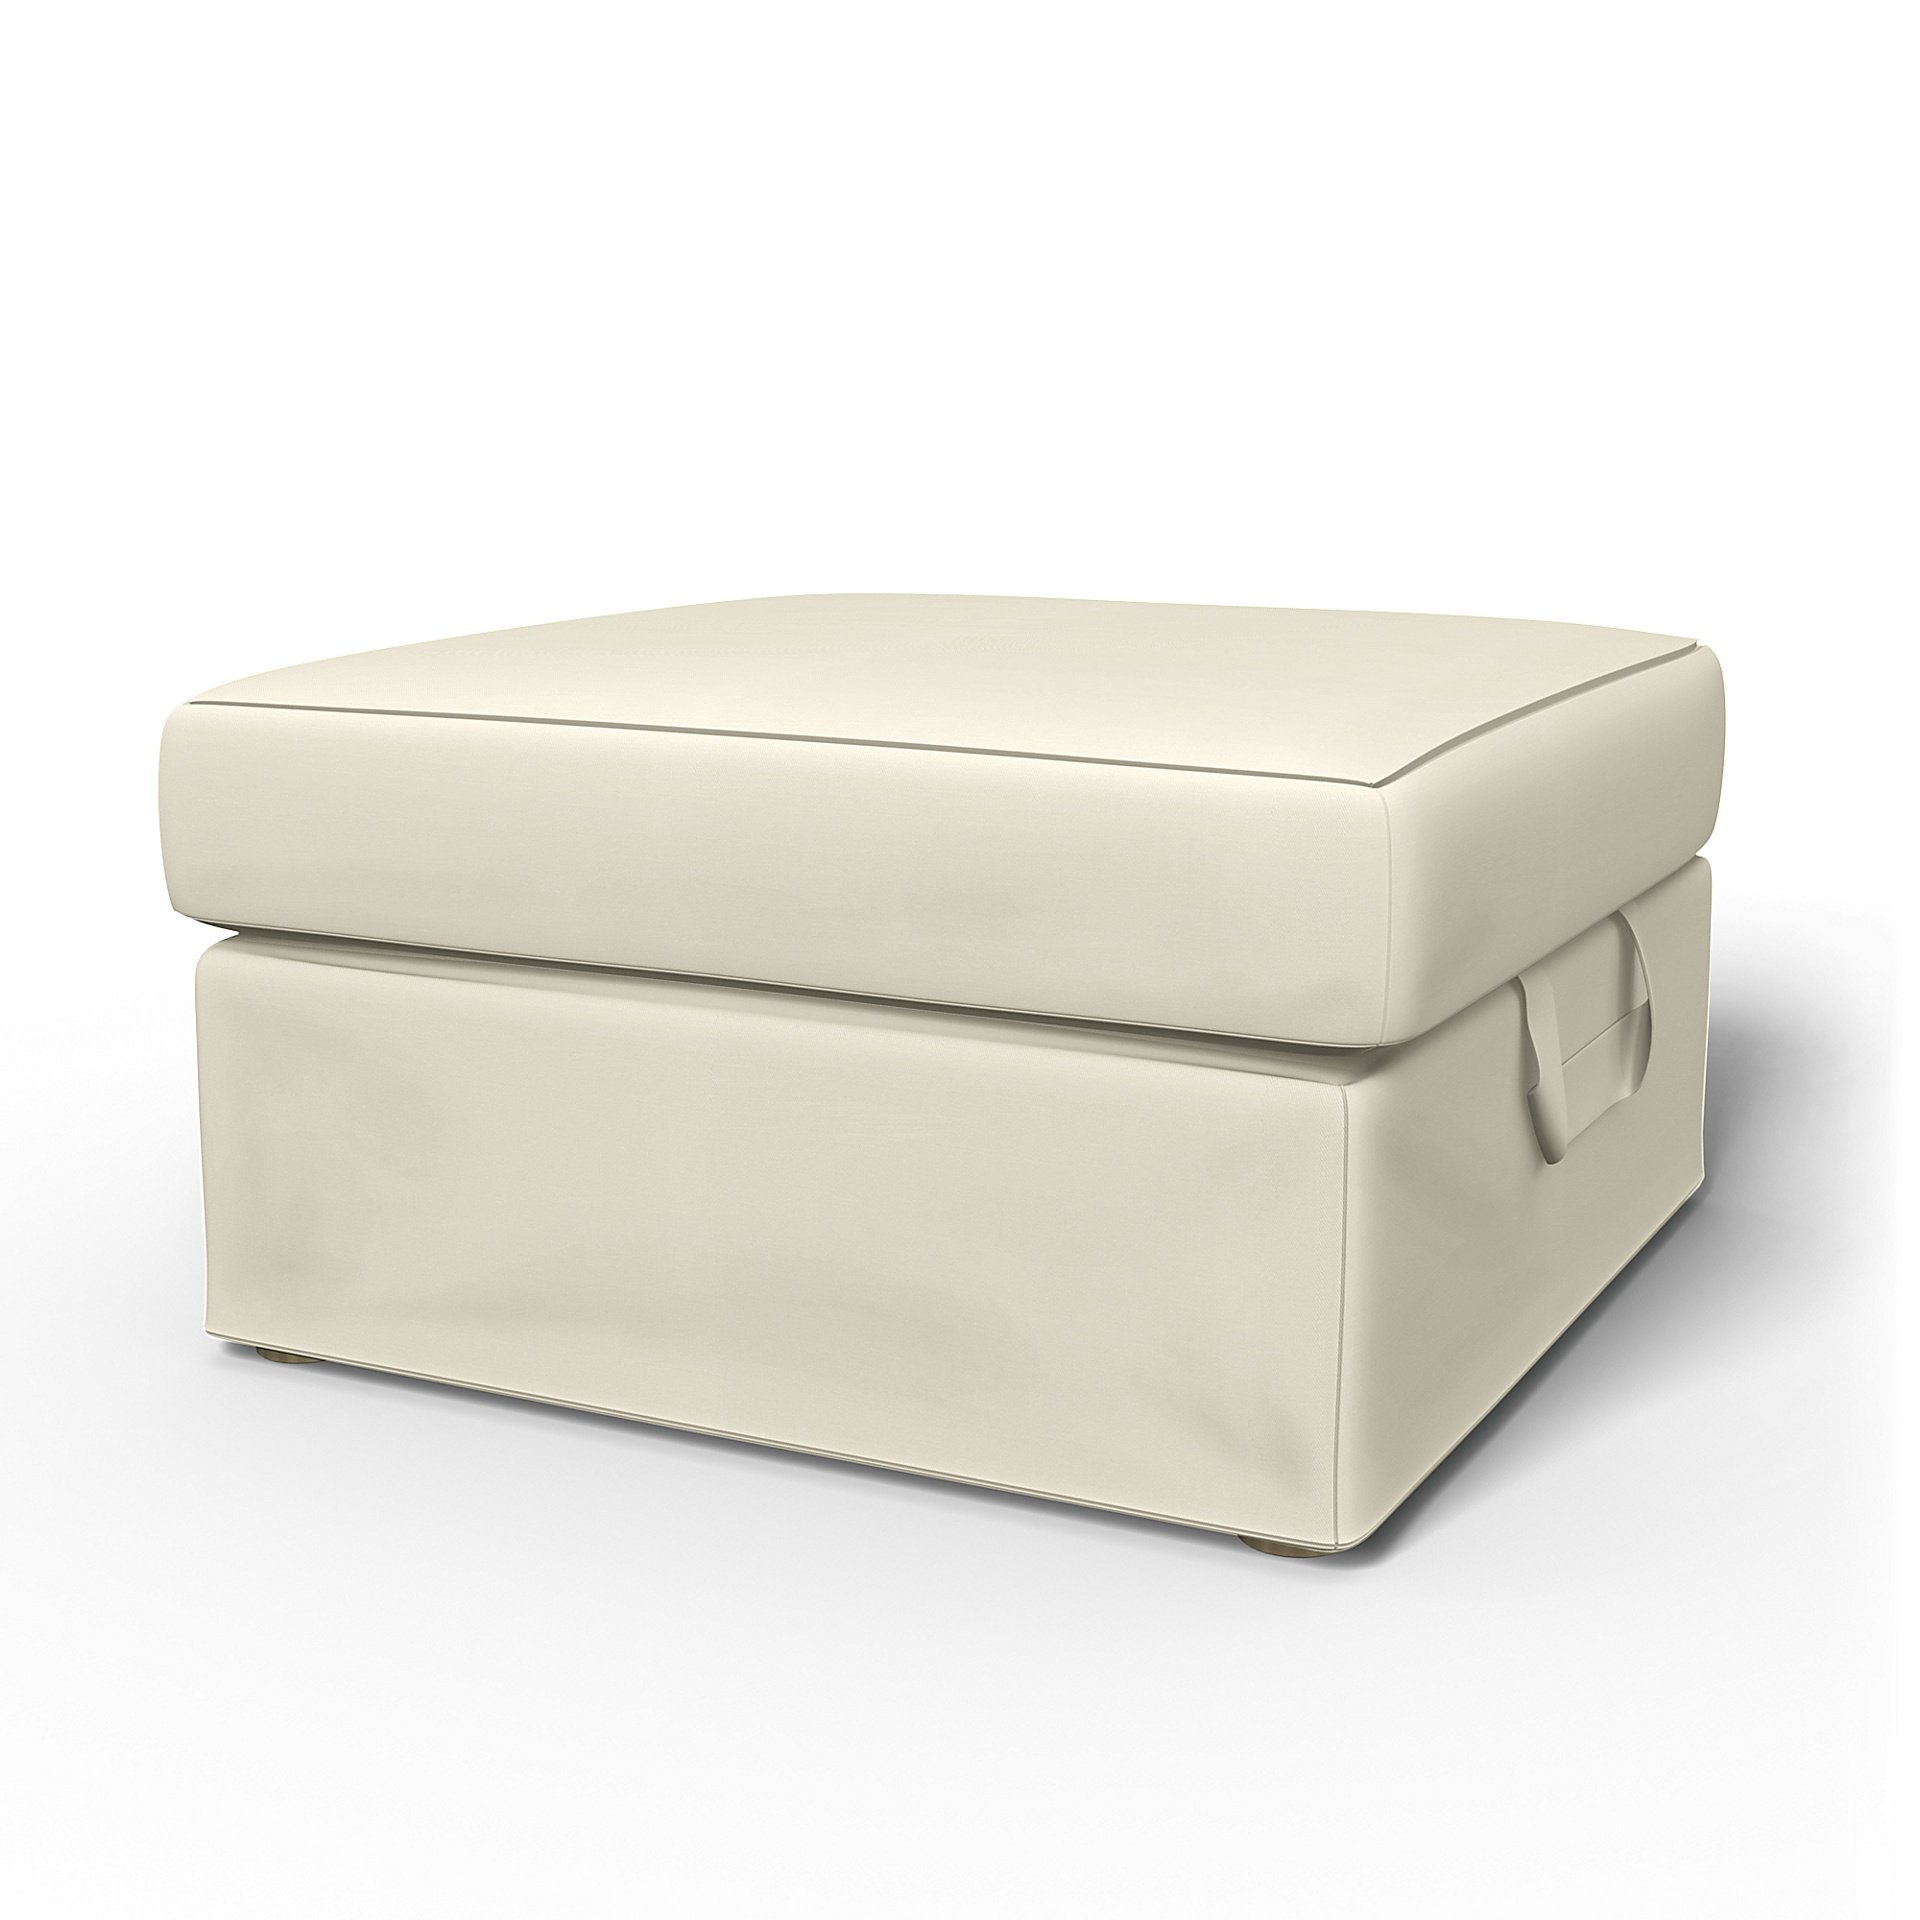 IKEA - Tomelilla Foto Footstool Cover, Tofu, Cotton - Bemz